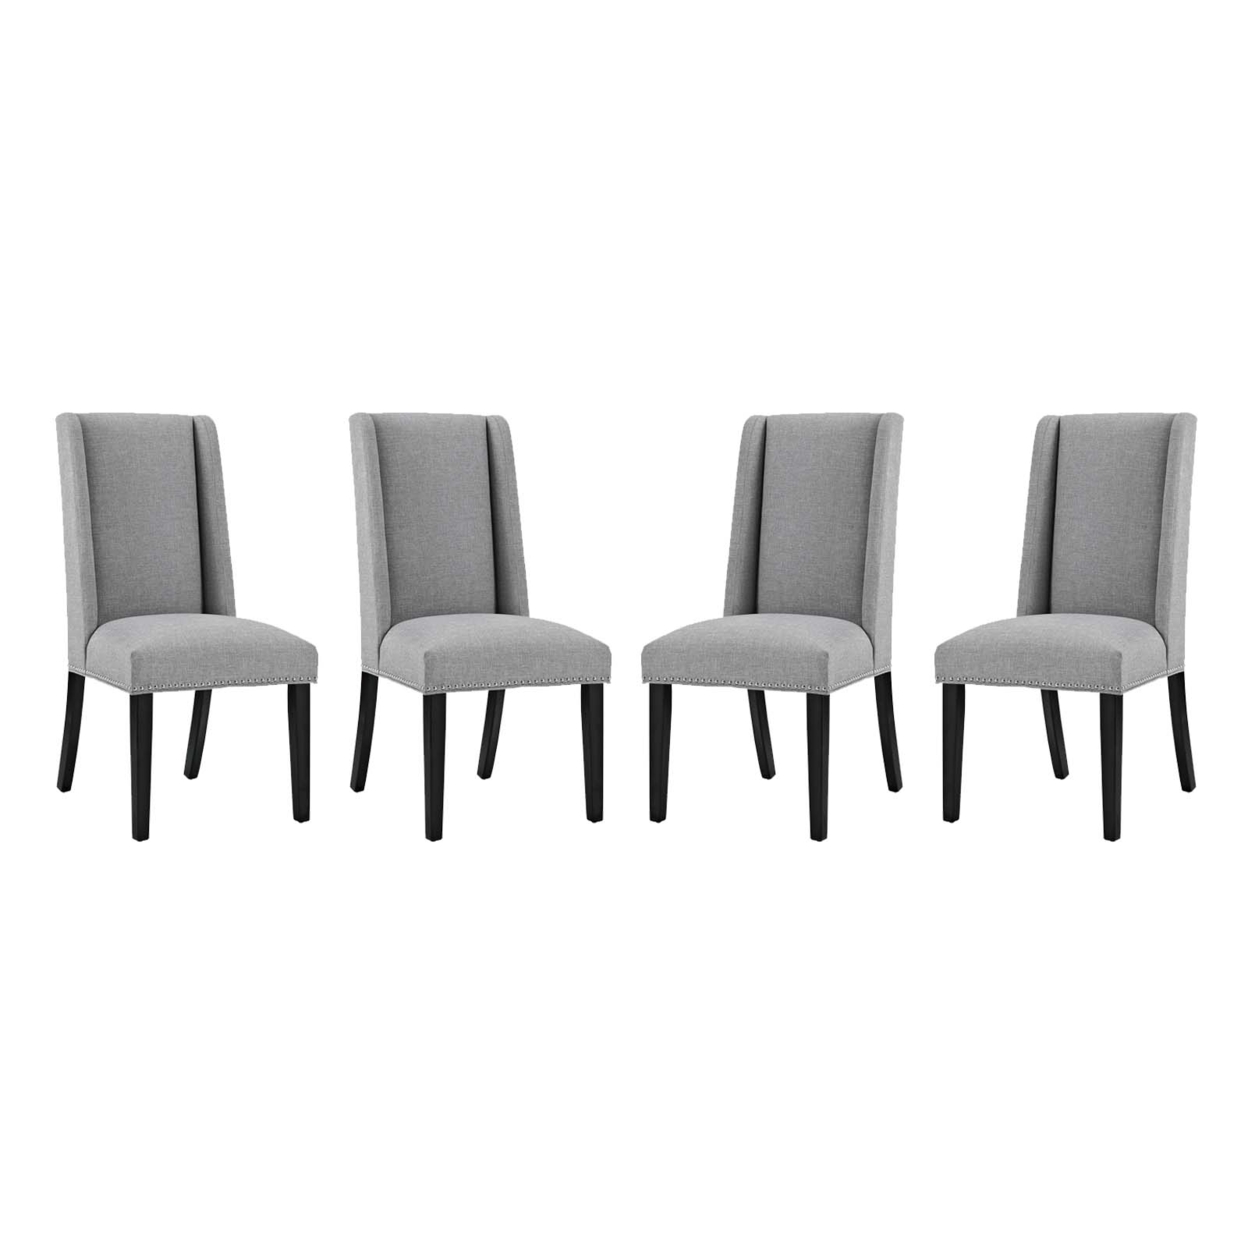 Baron Dining Chair Fabric Set of 4, Light Gray